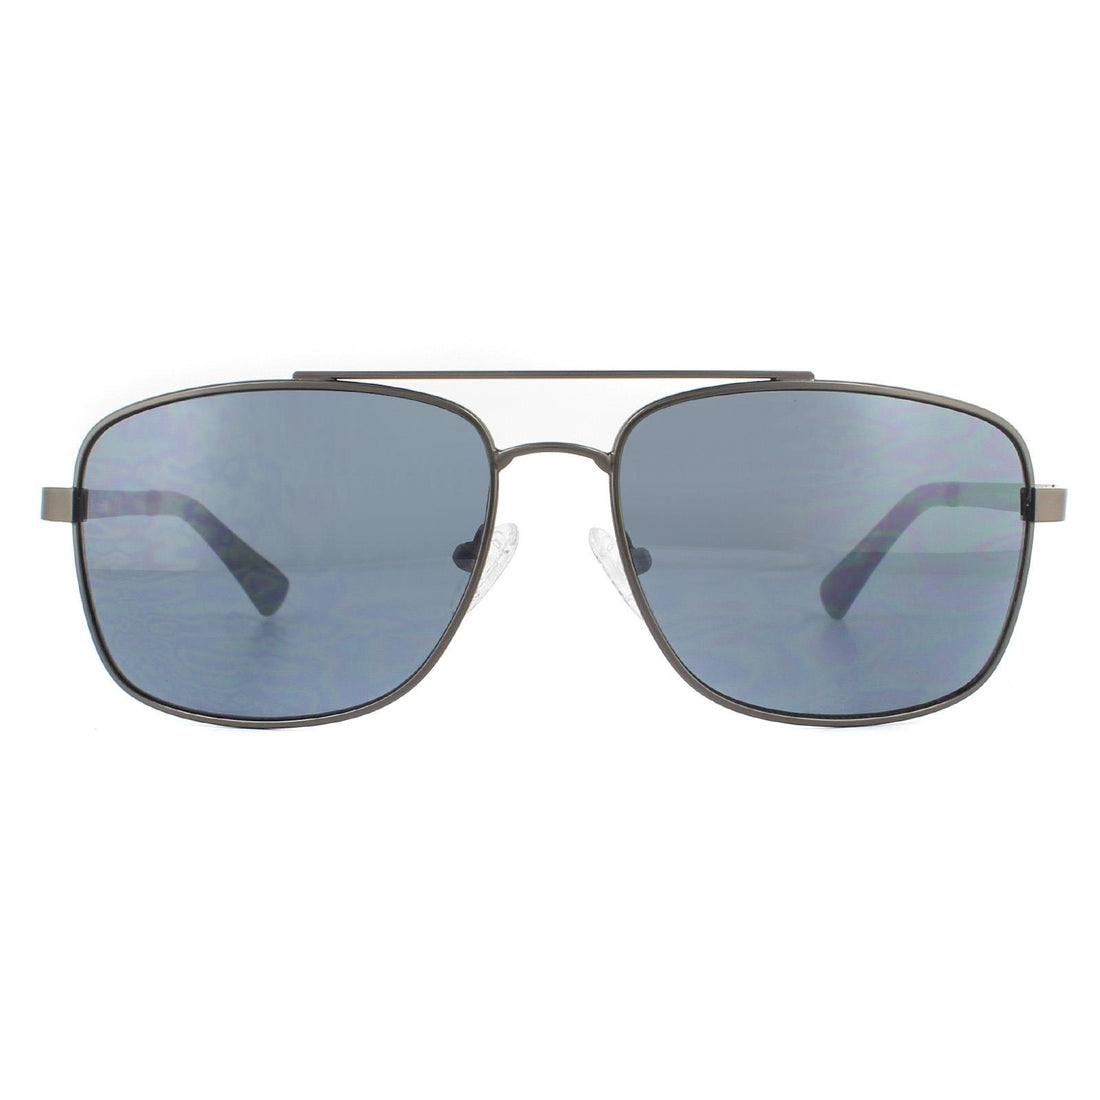 Timberland TB7175 Sunglasses Gunmetal Grey / Grey Blue